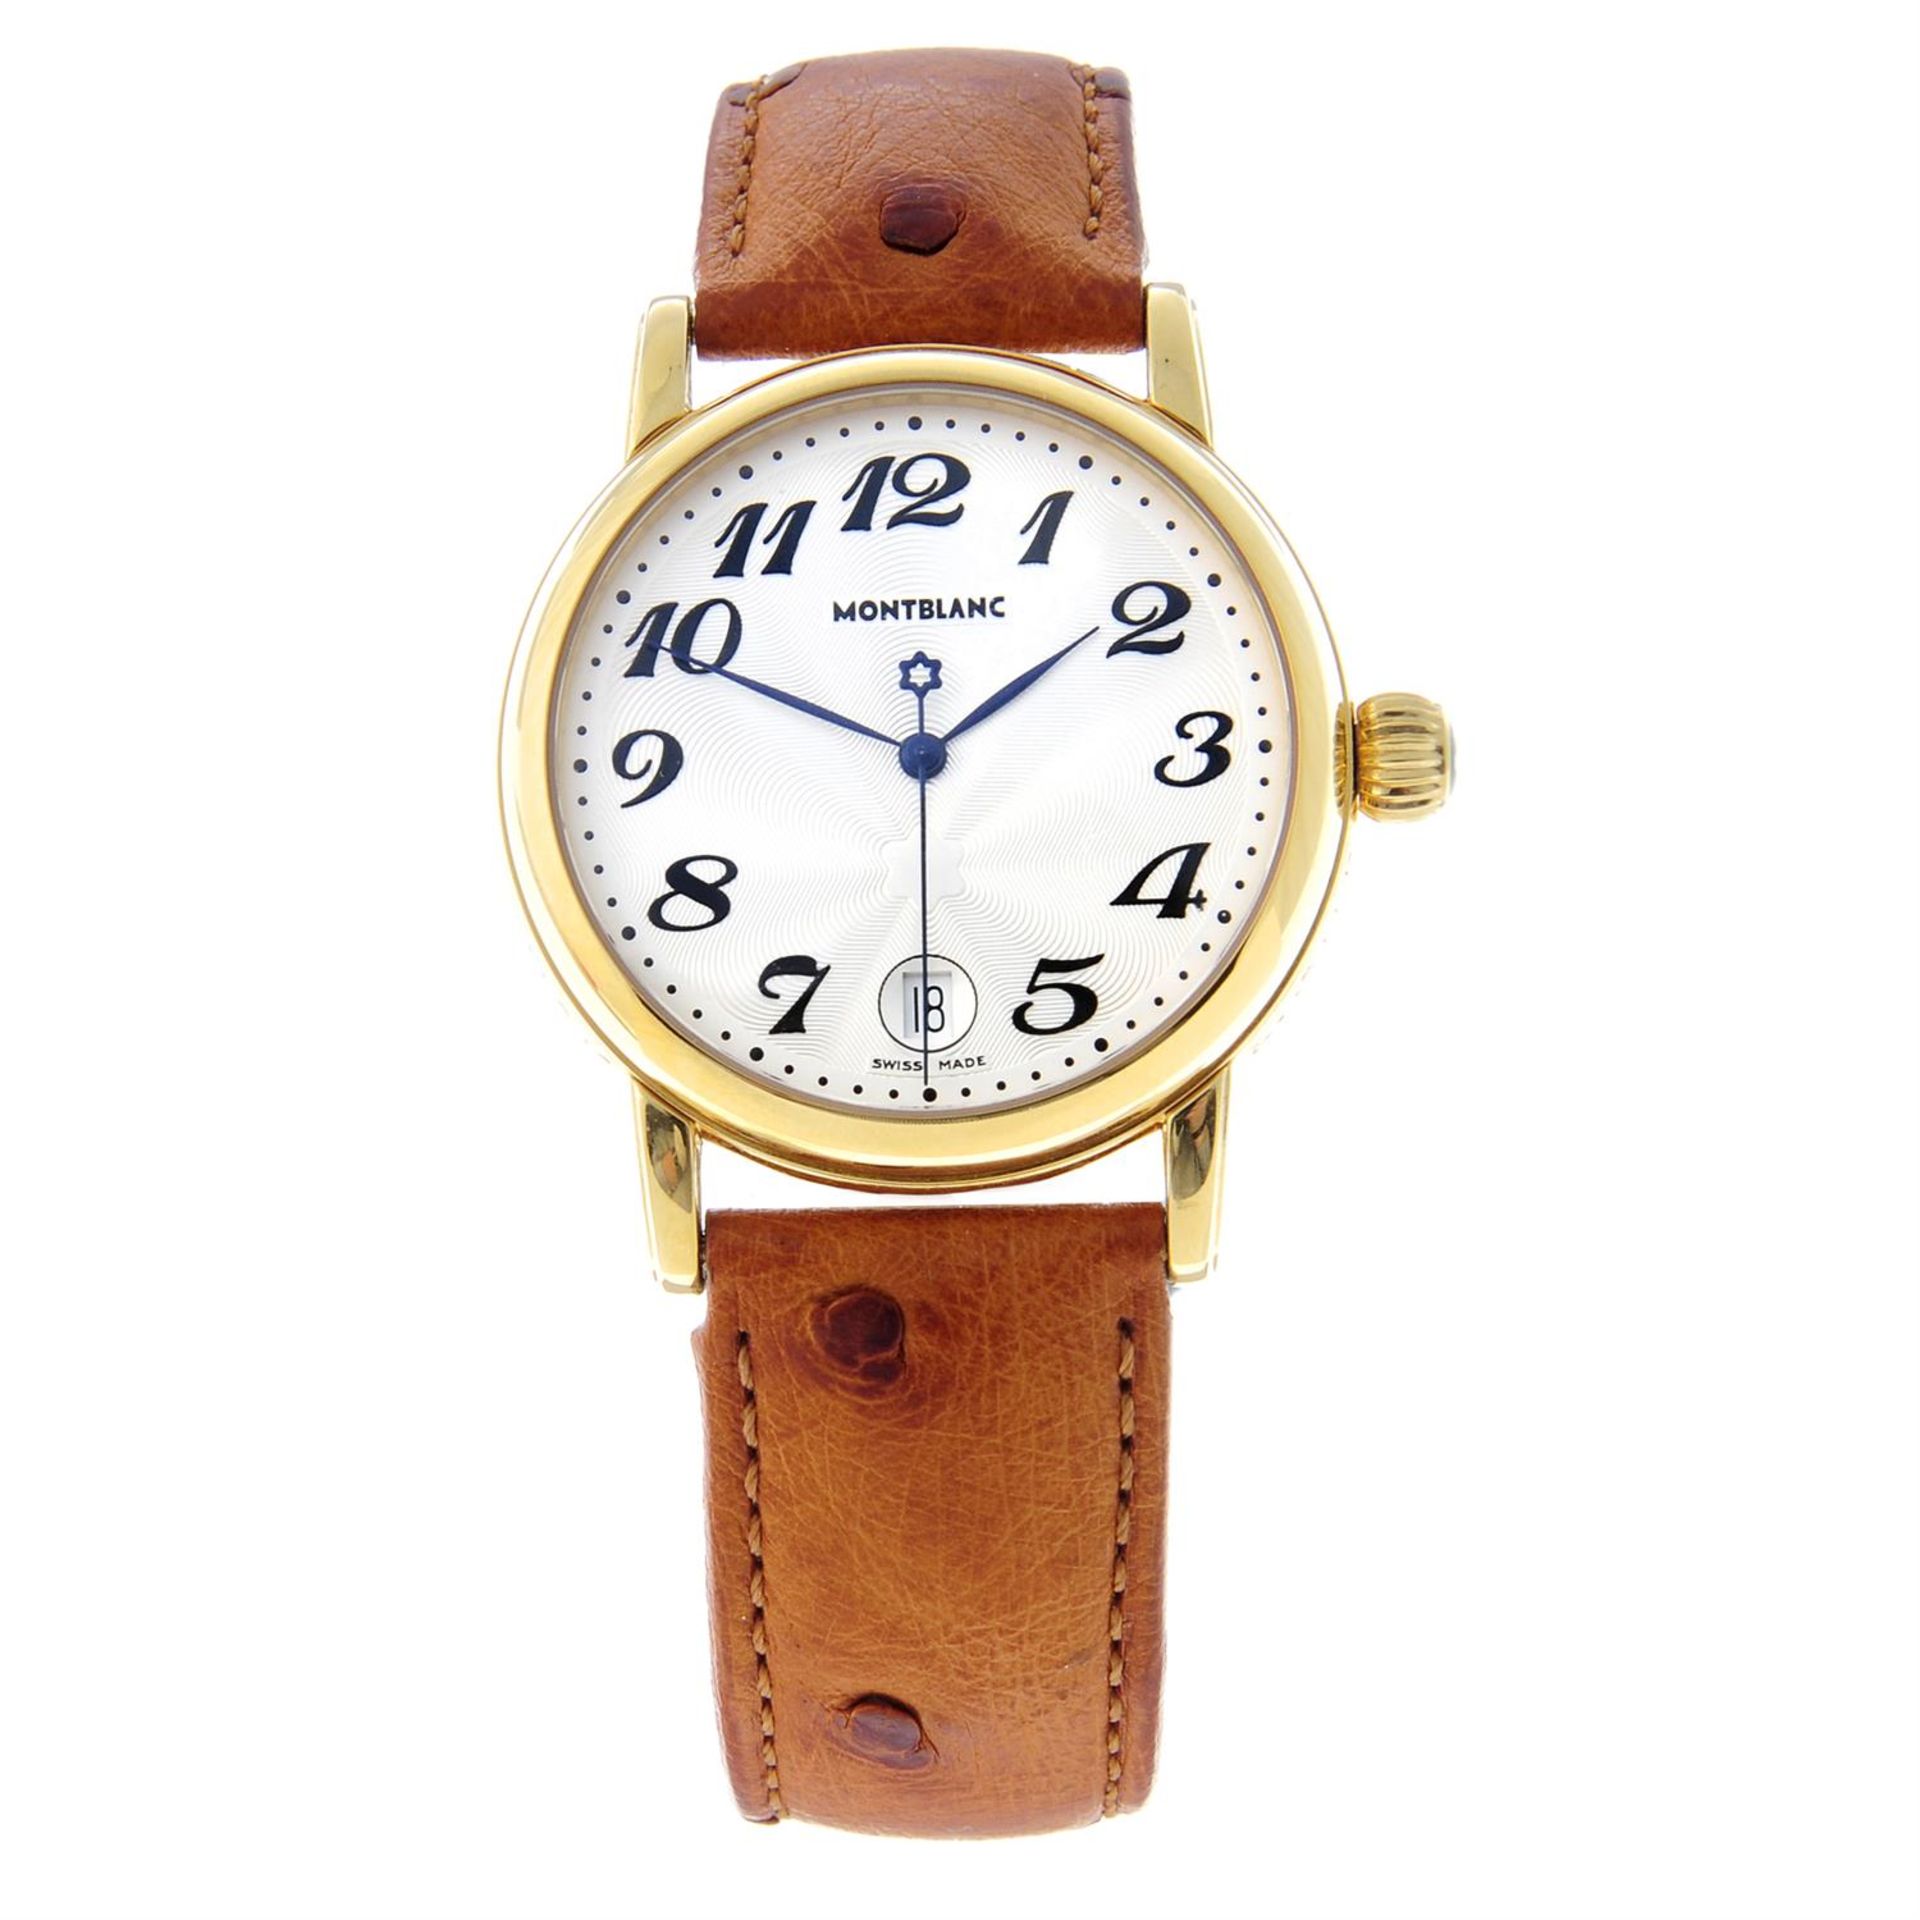 MONTBLANC - a gold plated Meisterstuck wrist watch, 35mm.